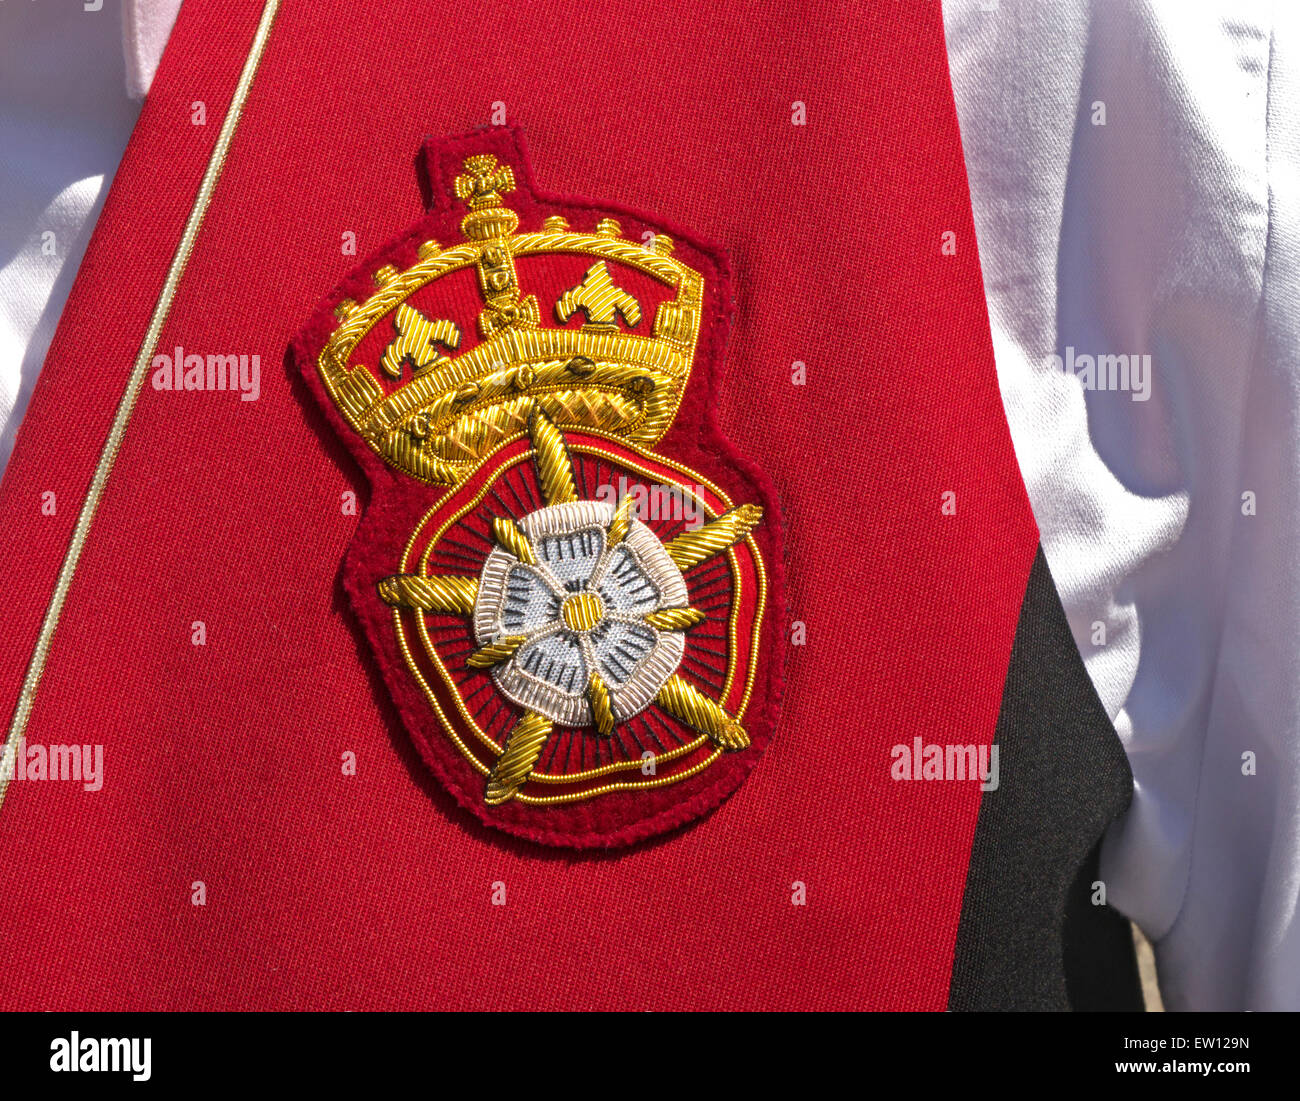 Tudor Crest Hampton Court Palace uniformed tourist information guide crest/emblem on official guide’s red waistcoat close up view texture sunlit Stock Photo